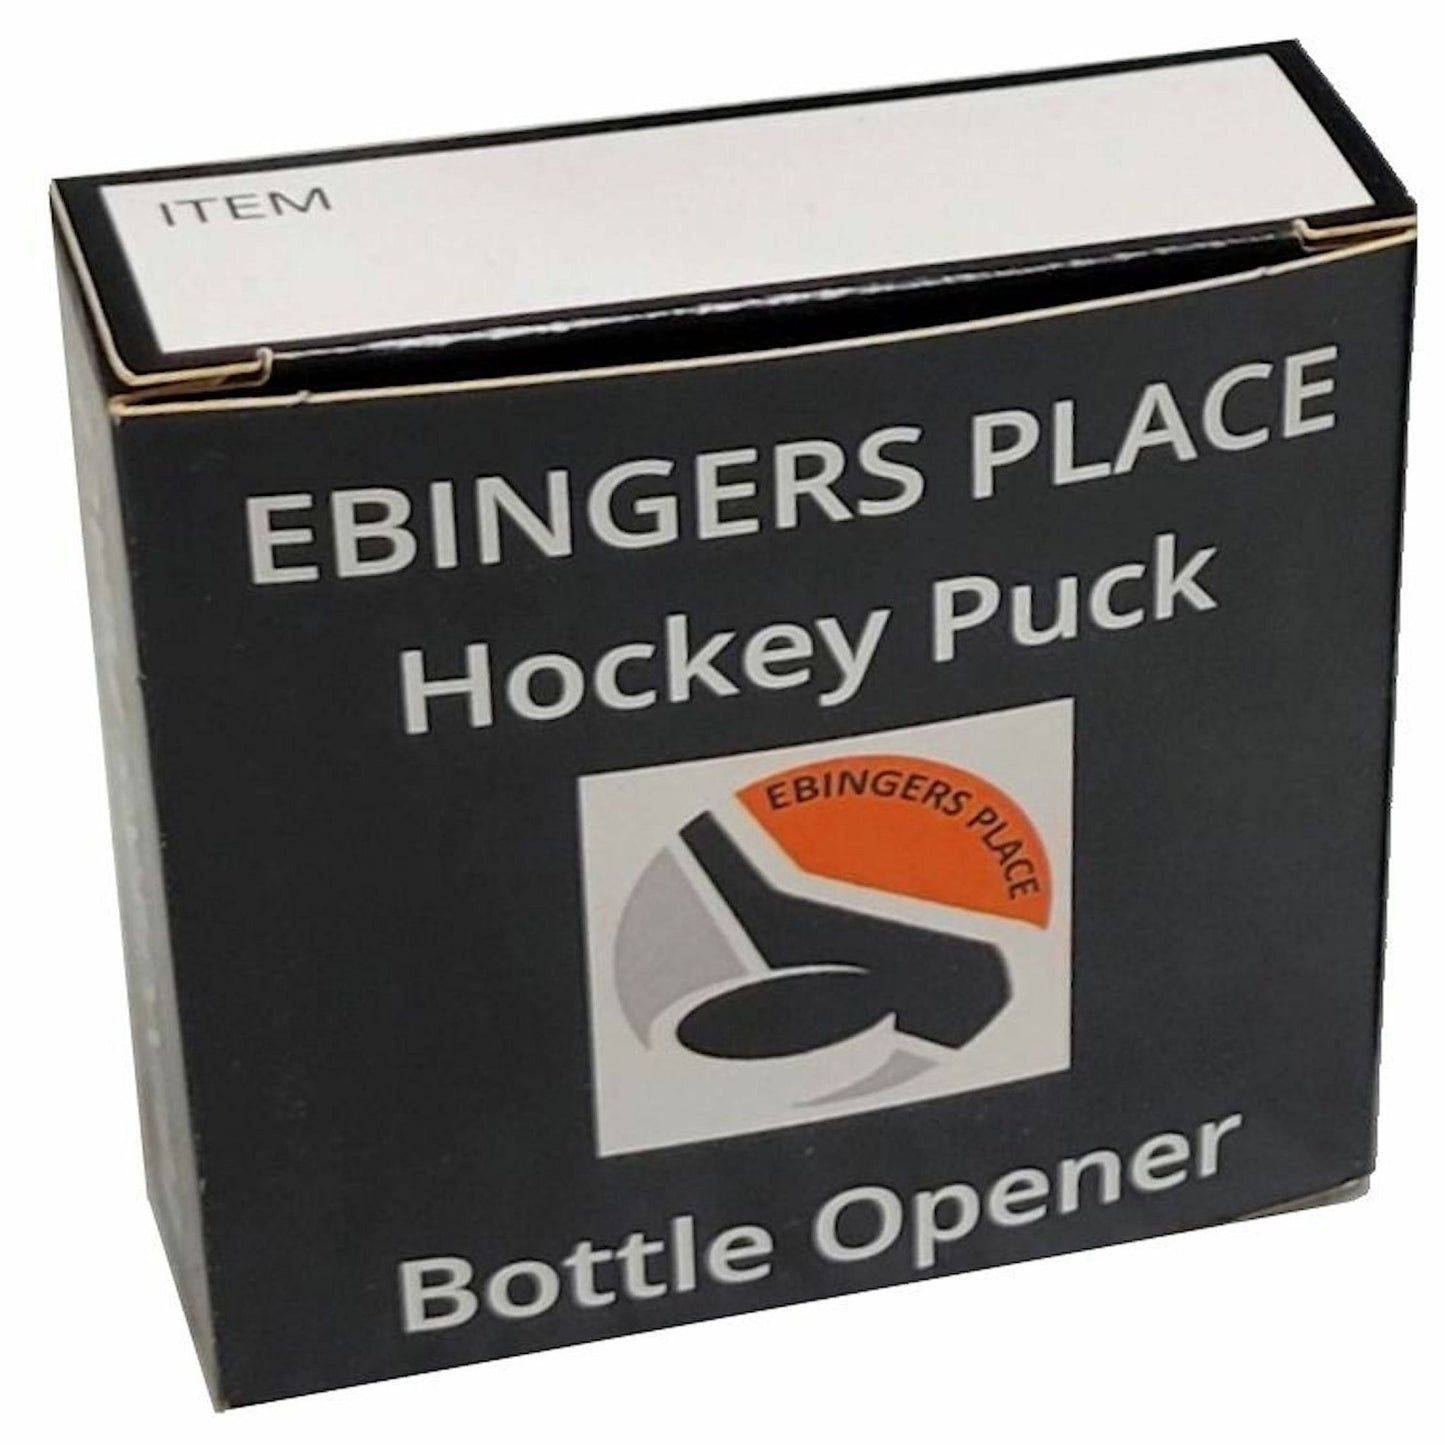 Anaheim Ducks Retro Series Hockey Puck Bottle Opener